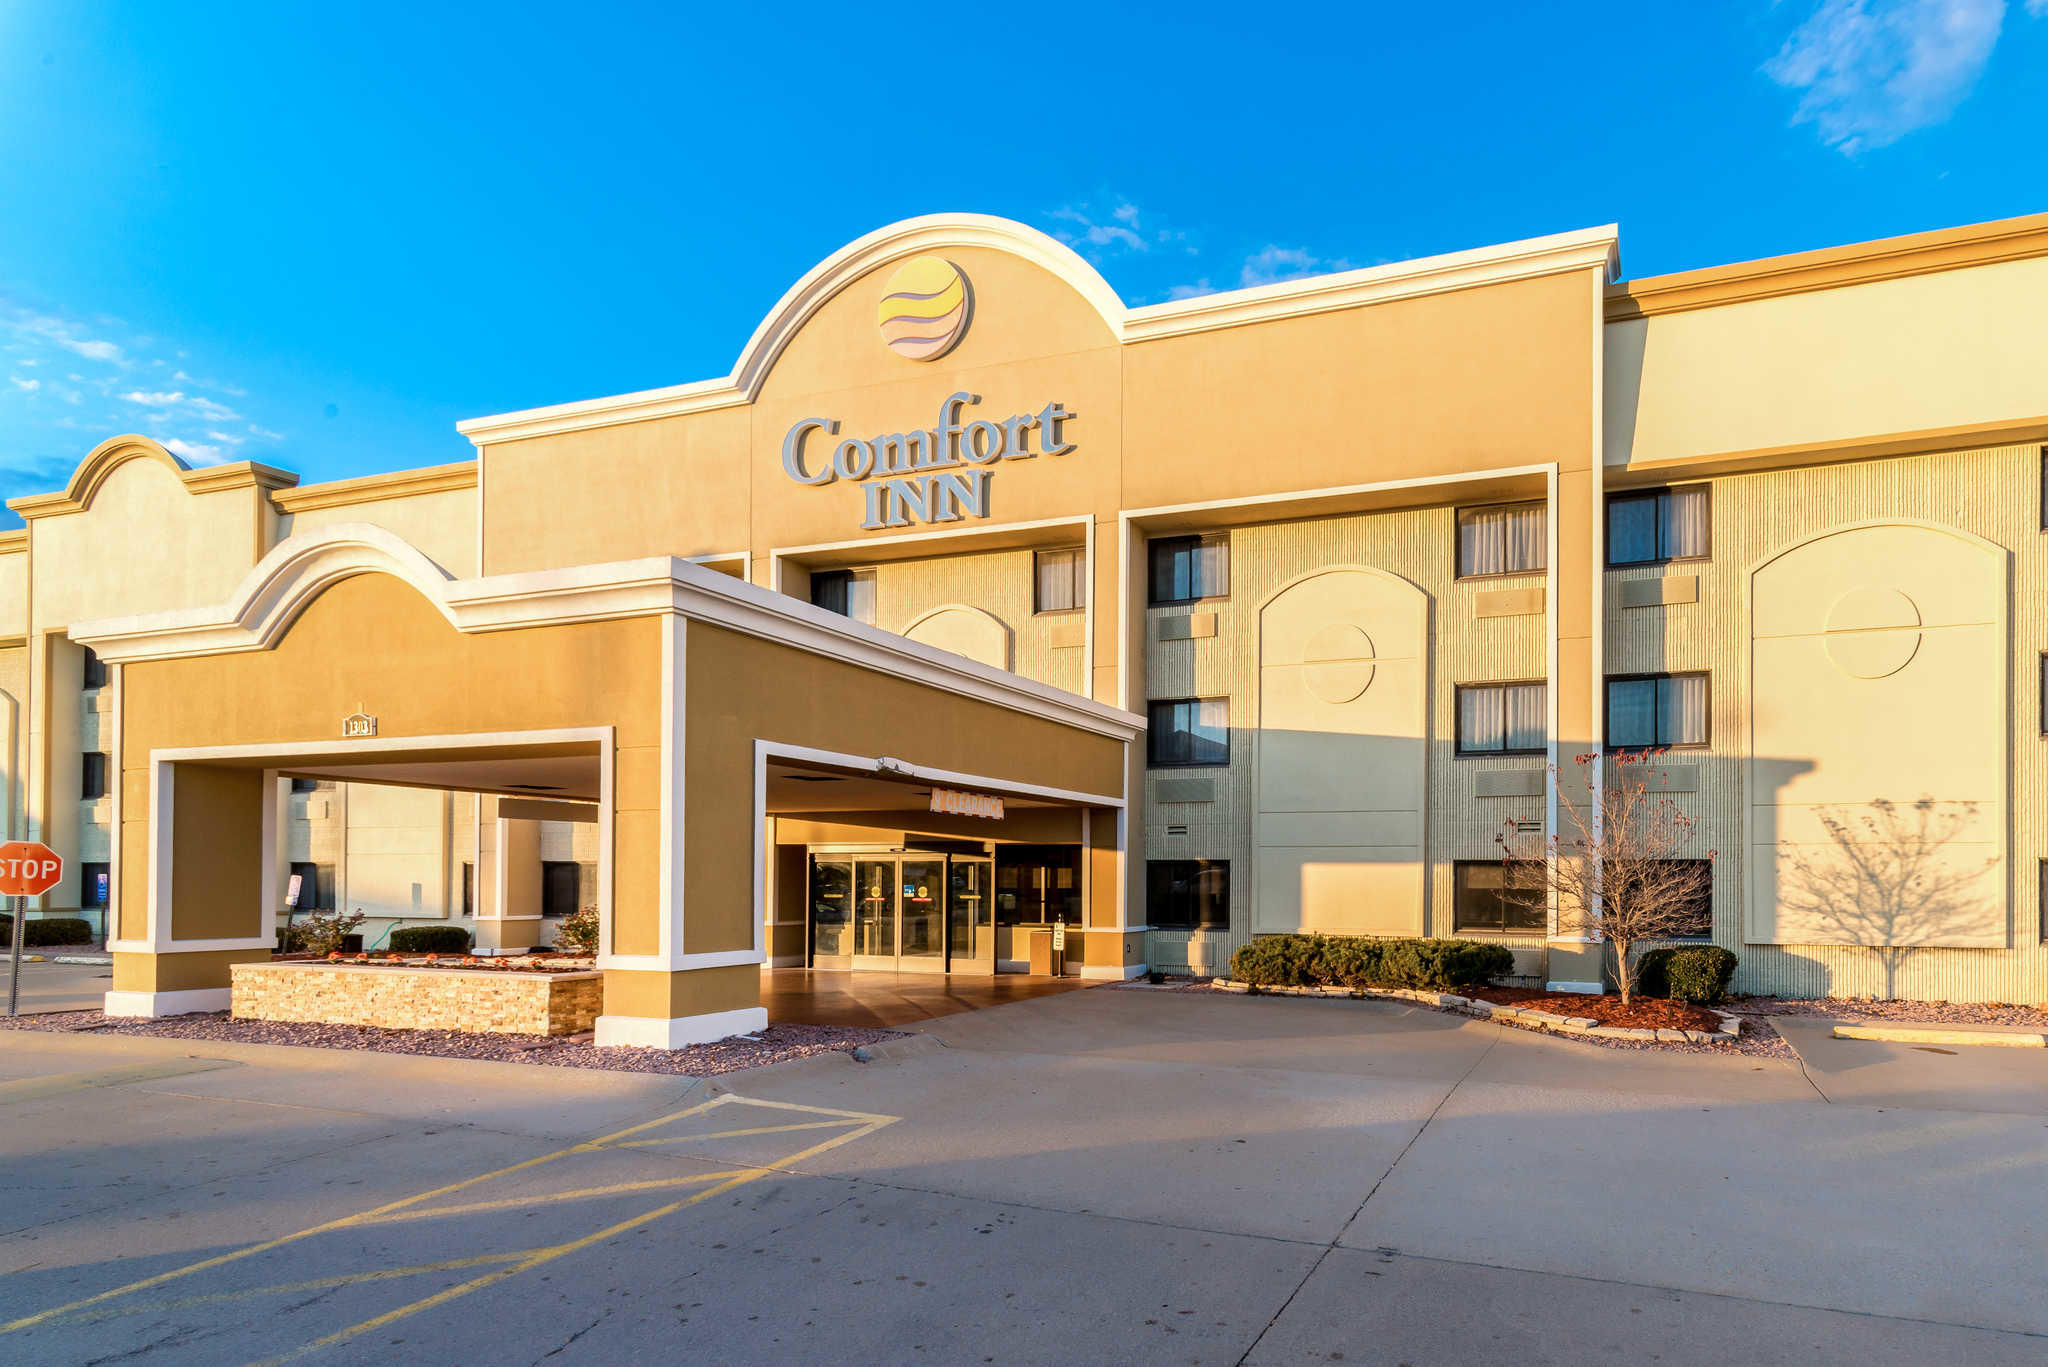 Comfort Inn Festus-St Louis South, Festus Missouri (MO) - 0